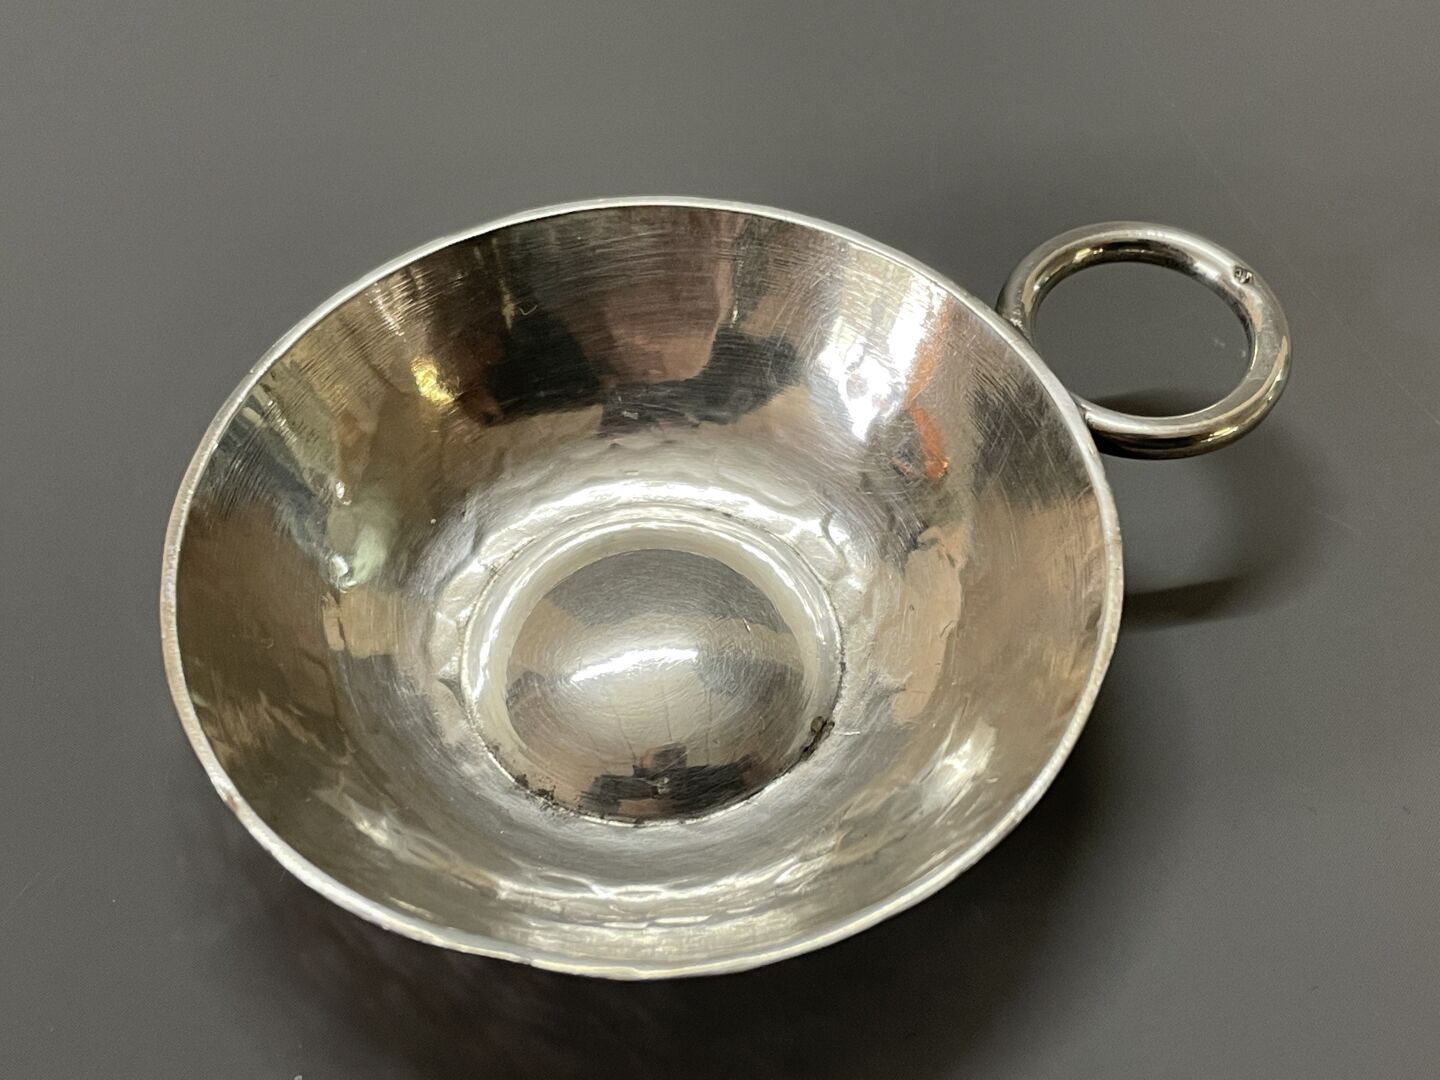 Null 让-戴斯普雷斯 (1889-1980)

镀银金属酒精滴。

H.1,5厘米。D. :8厘米。